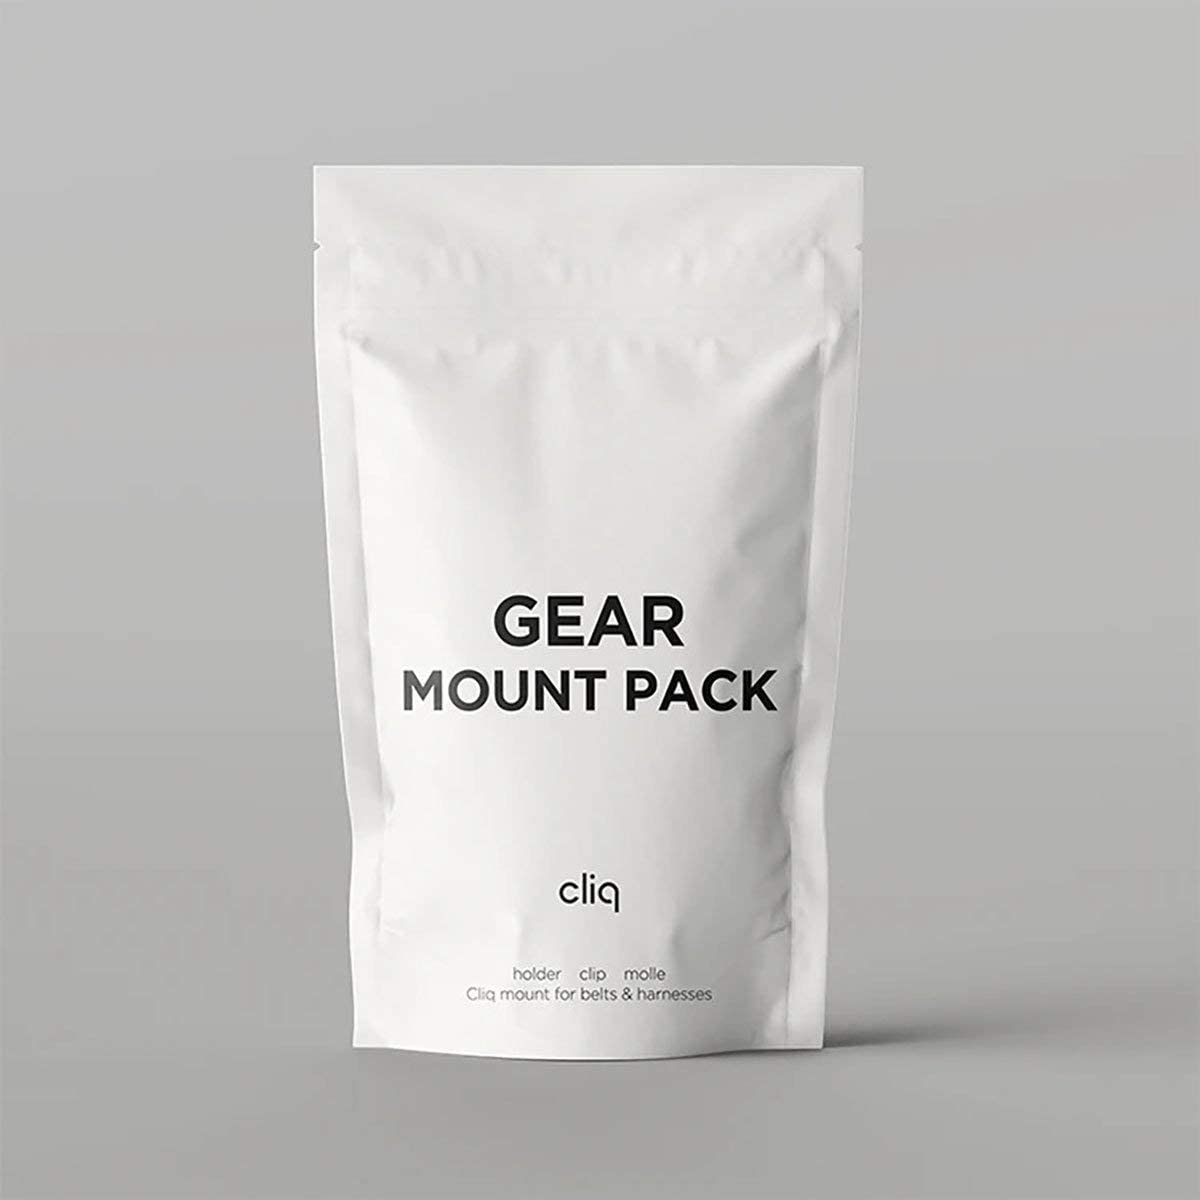 Smart Cliq Gear Mount Pack